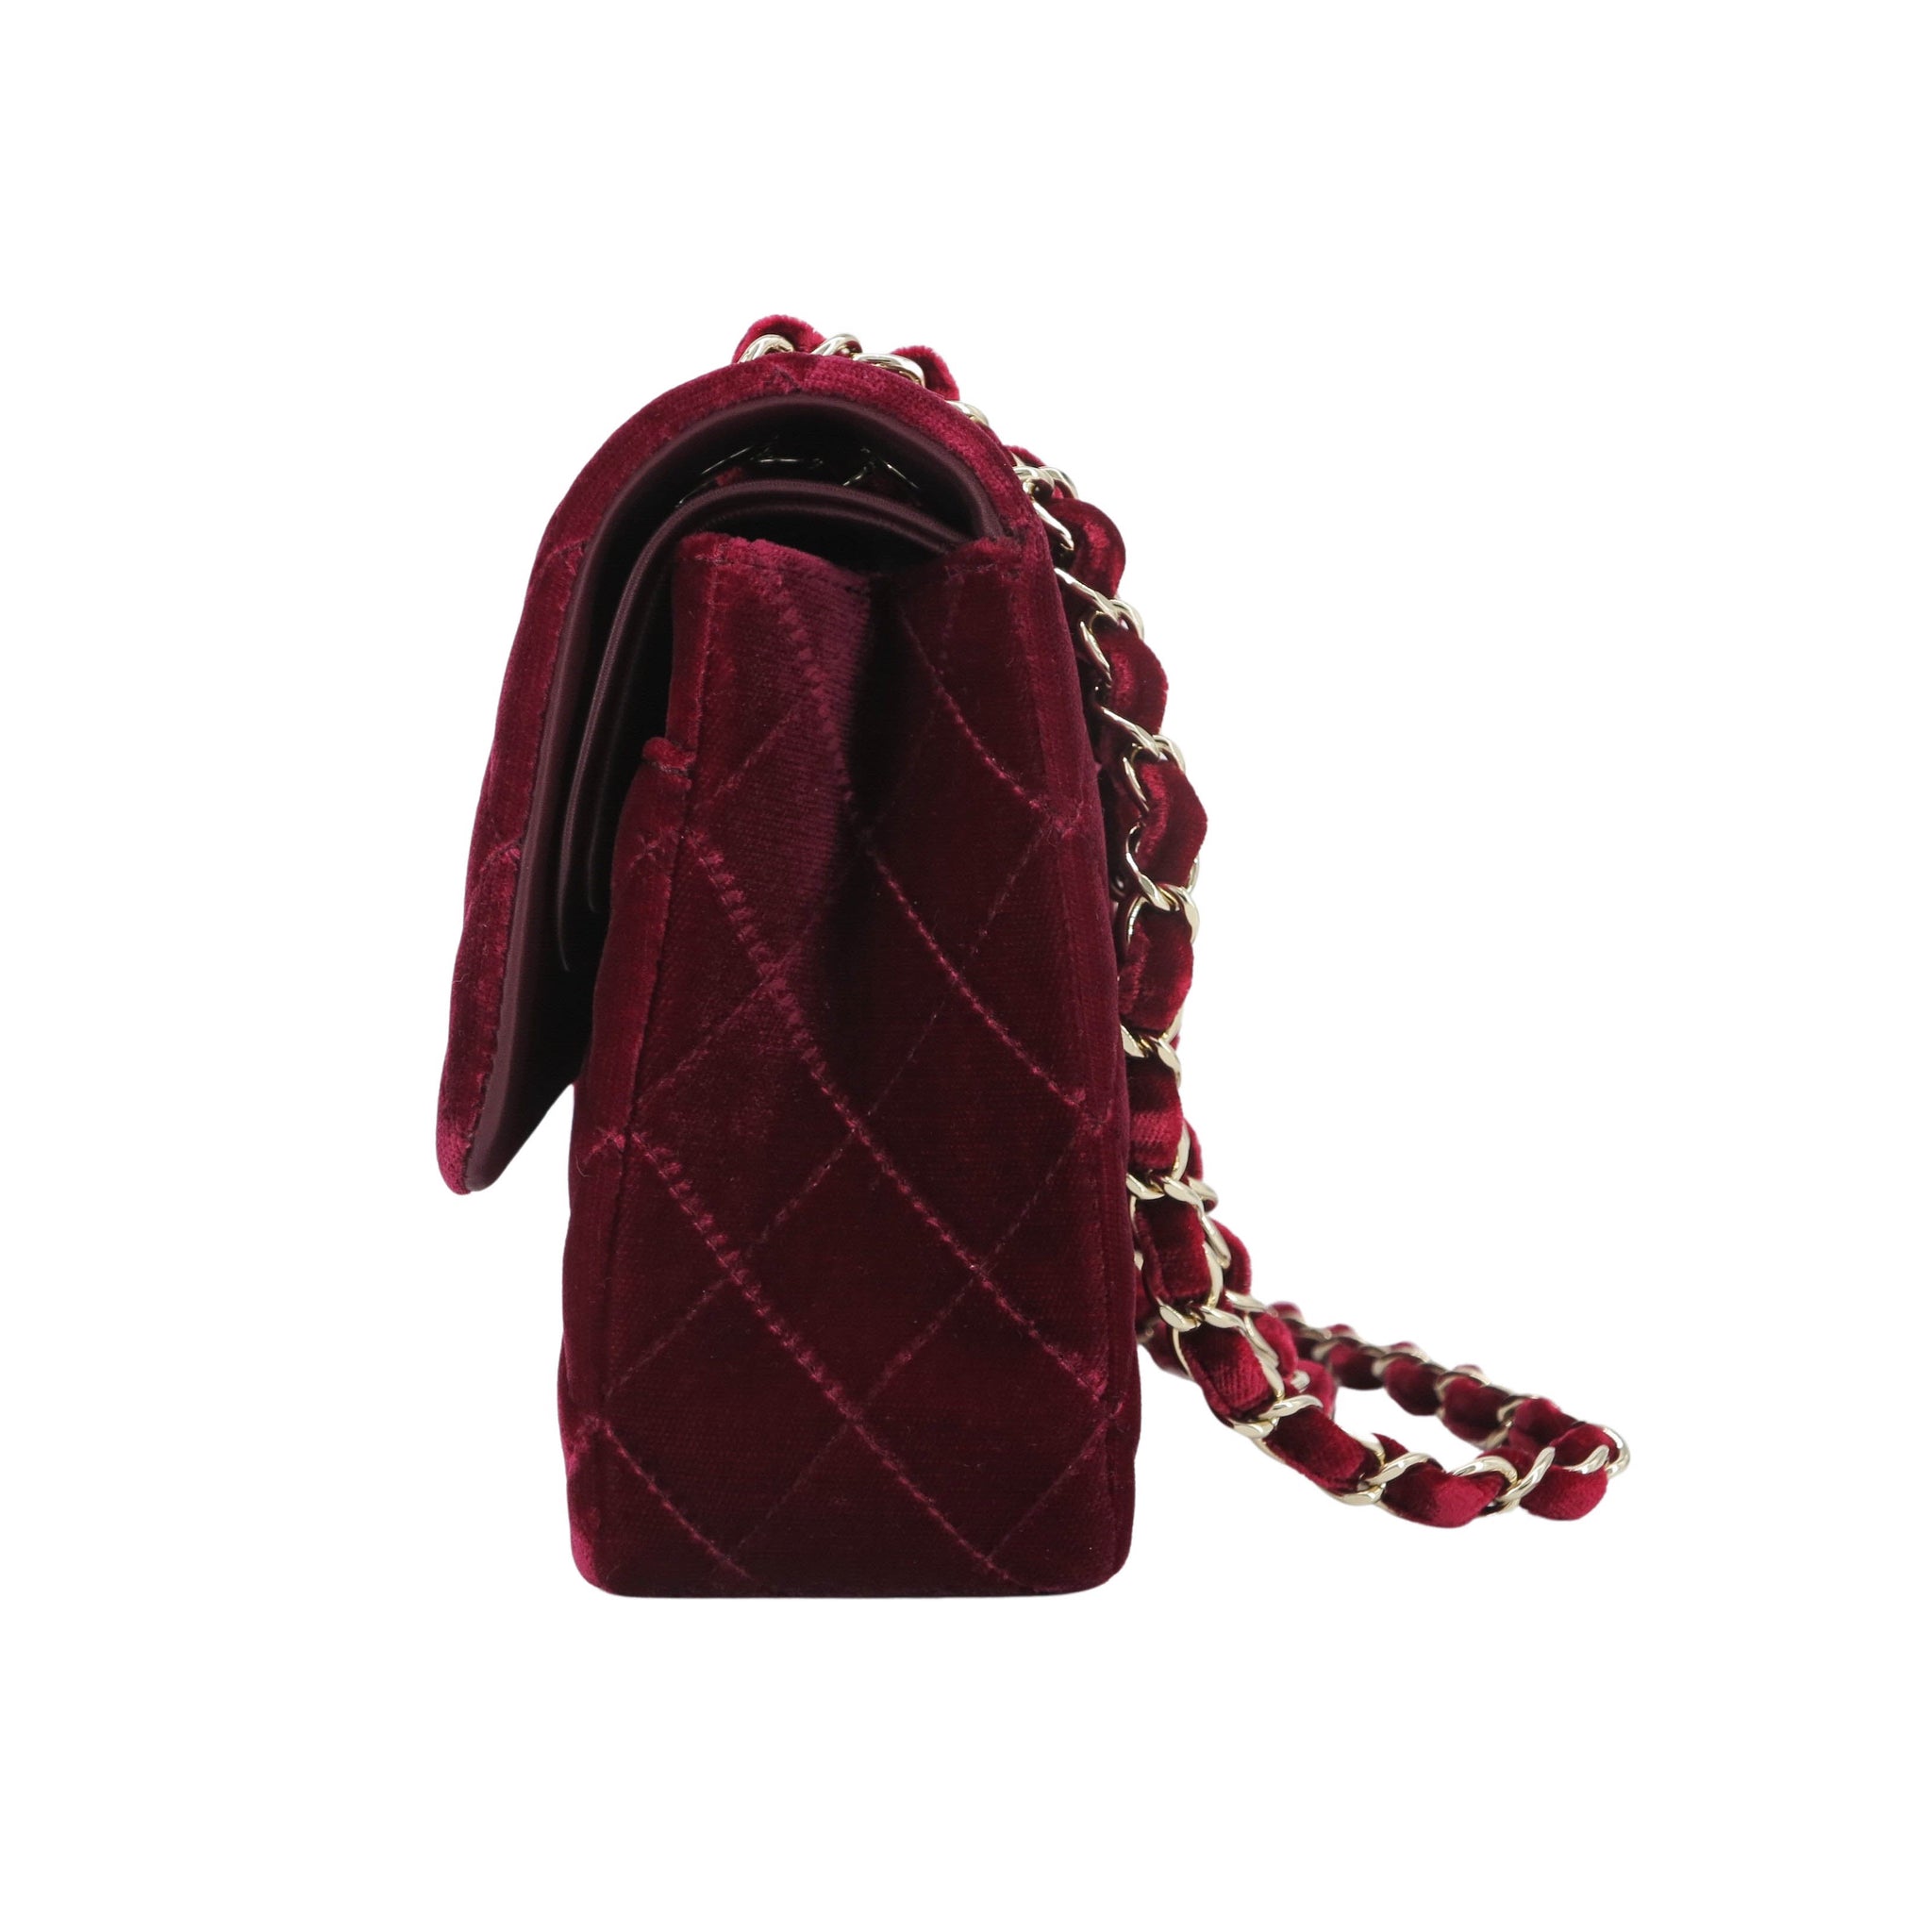 New Chanel Classic Flap Bag in Burgundy from PARIS  شانيل كلاسيك فلاب من  باريس باللون الماروني  YouTube